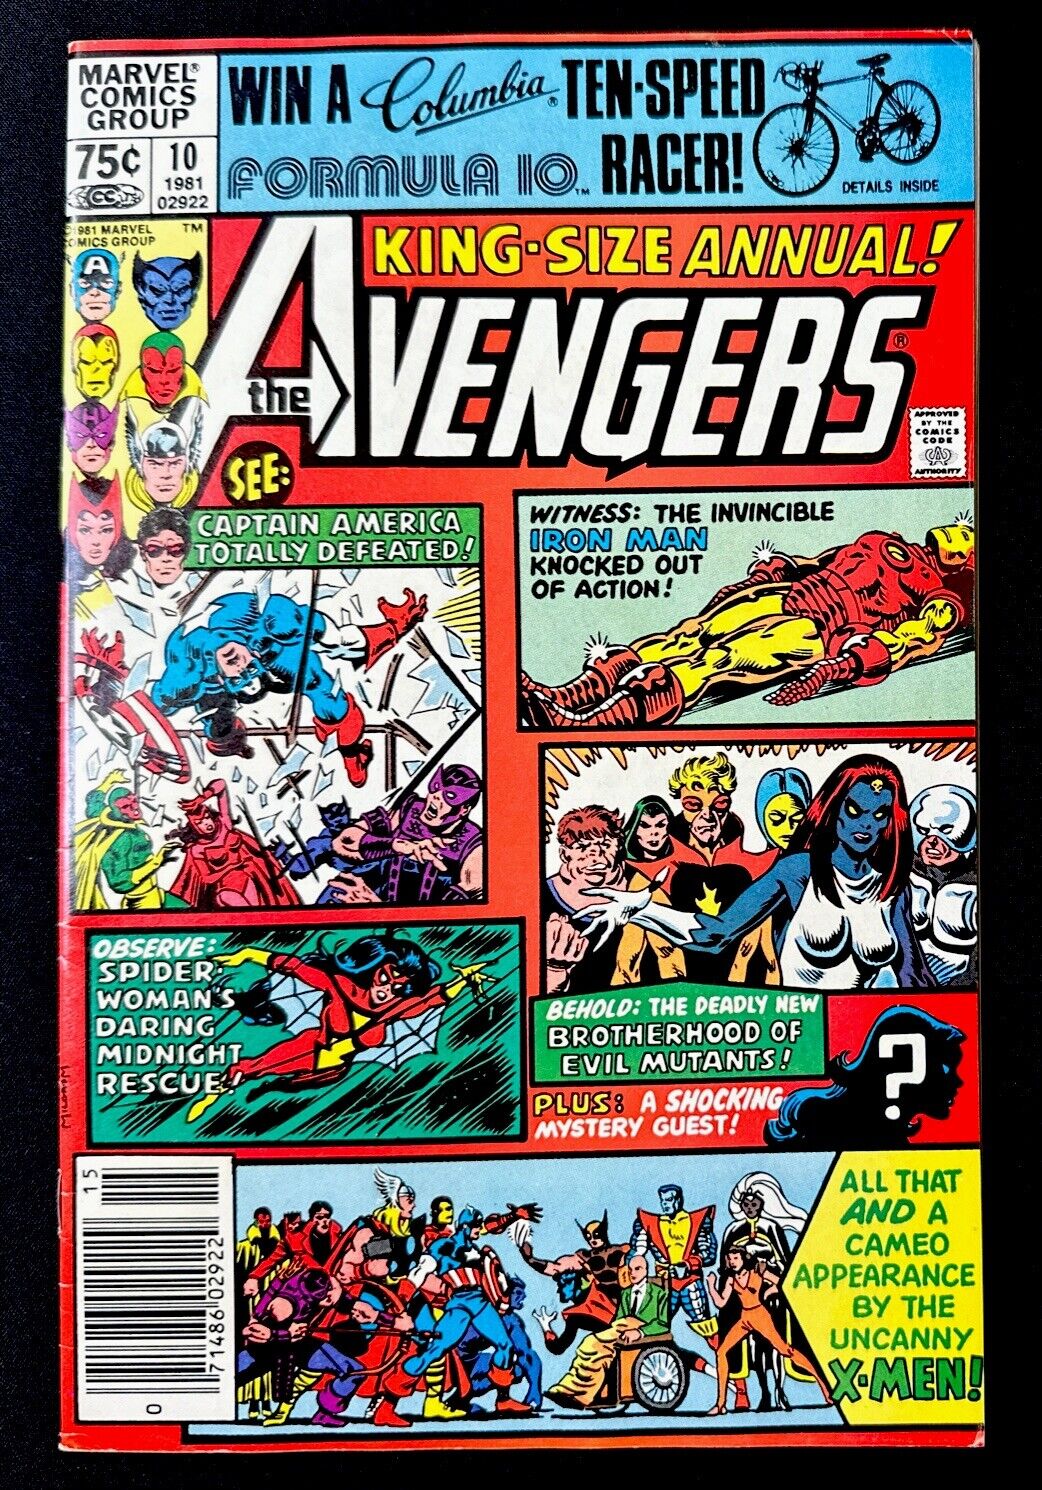 1981 MARVEL COMICS KING SIZE ANNUAL THE AVENGERS #10 1ST APP OF ROGUE X-MEN KEY